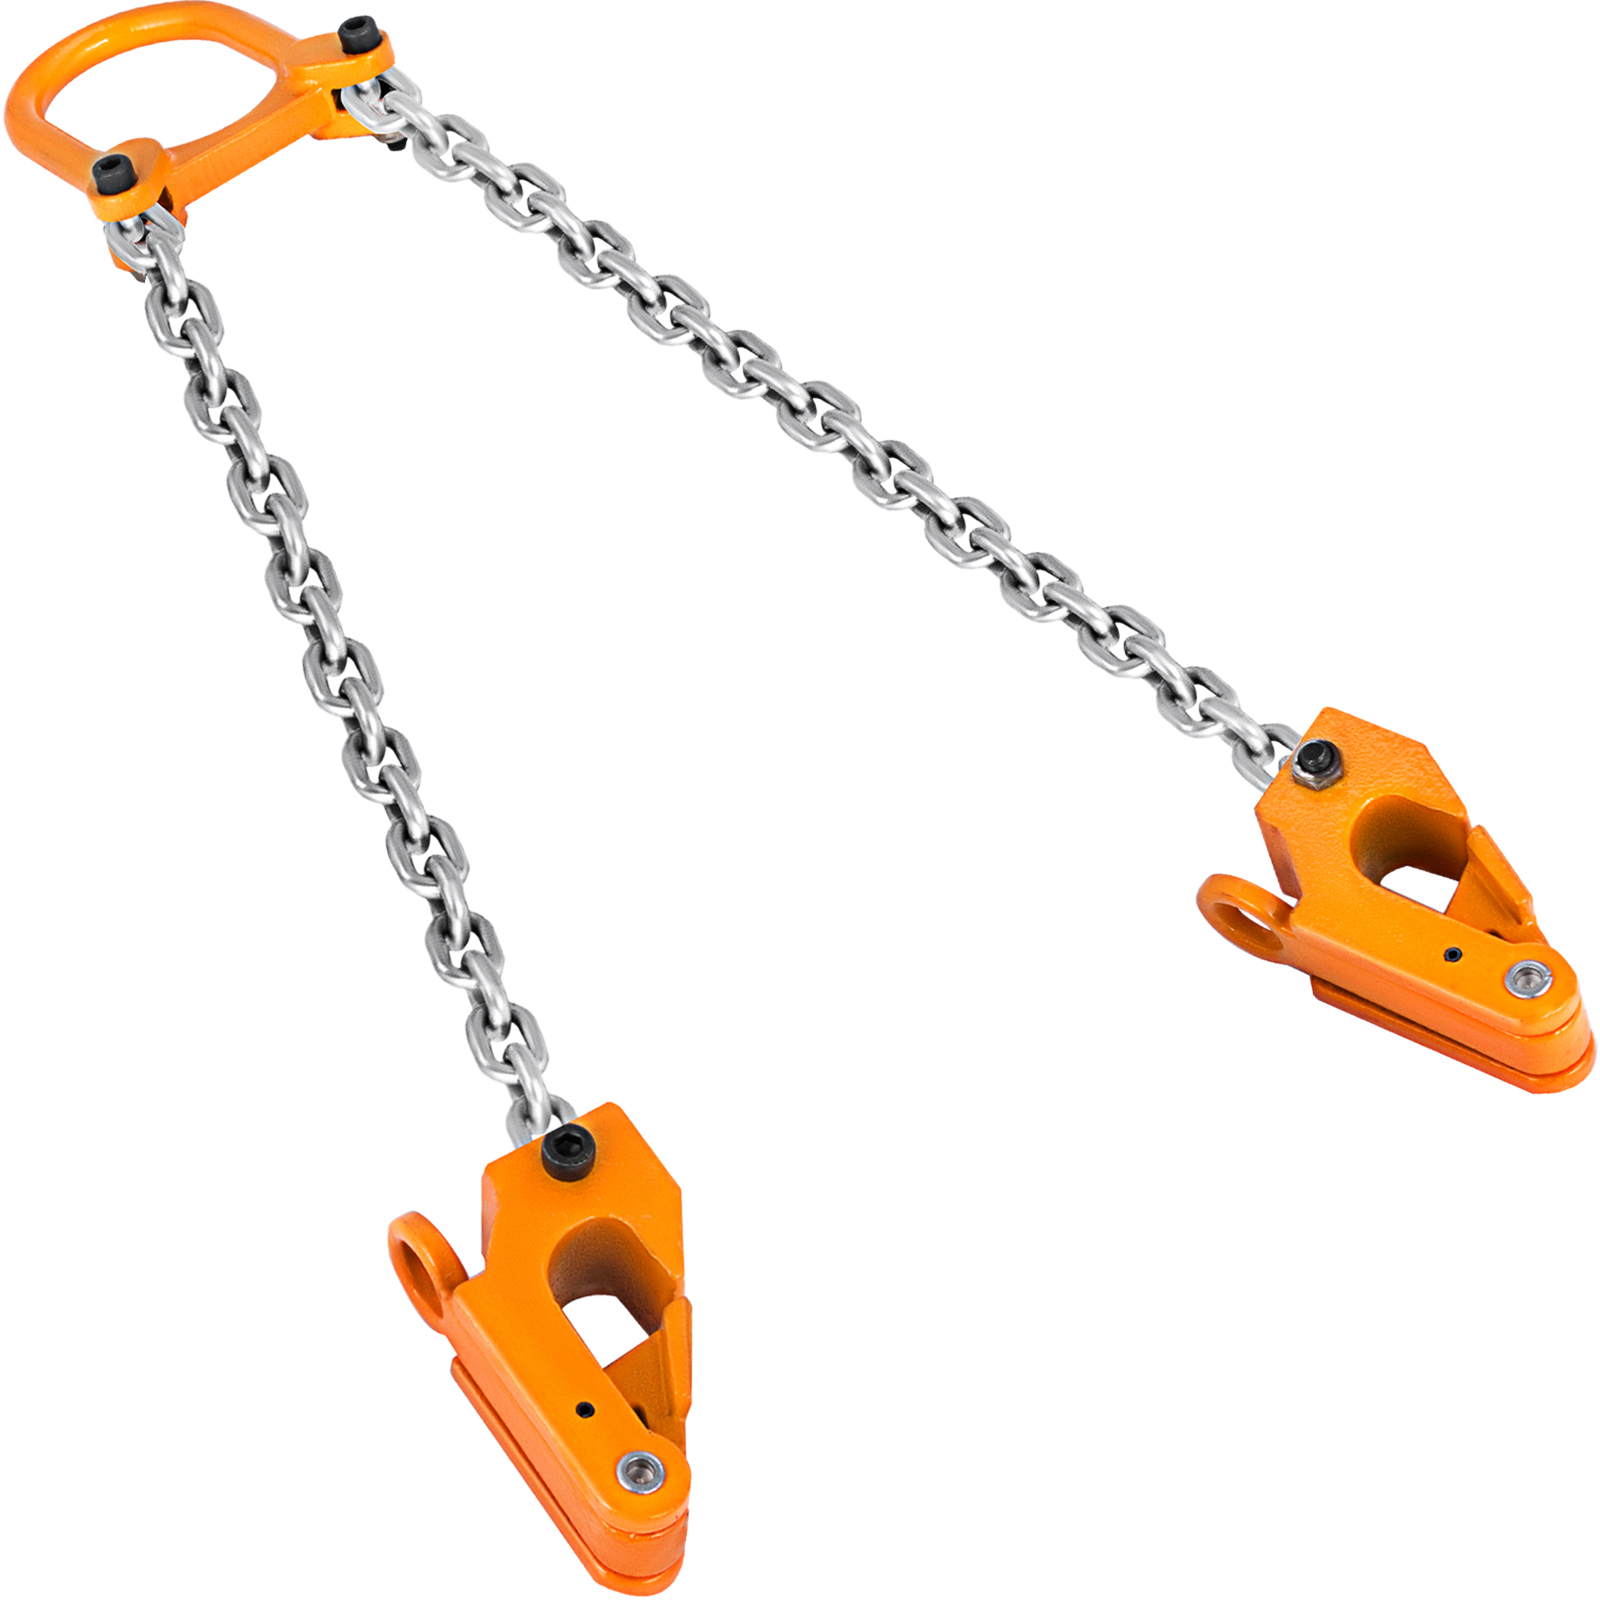 NovelBee Chain Drum Lifter,2000 lbs Capacity